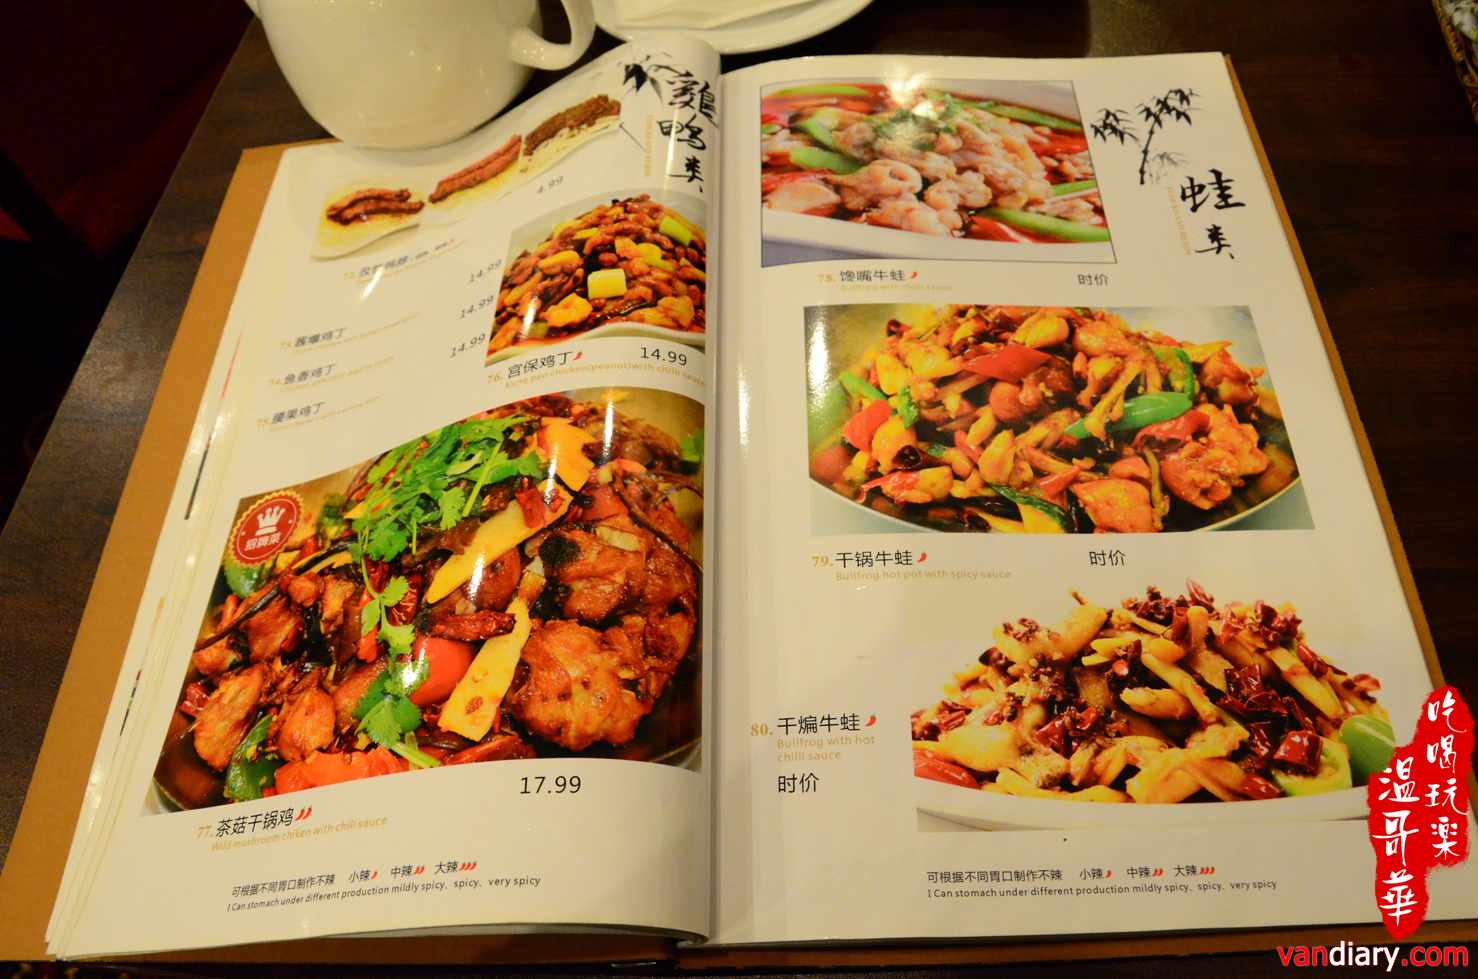 New Spicy Chili Restaurant 小四川 - Number 3 Road